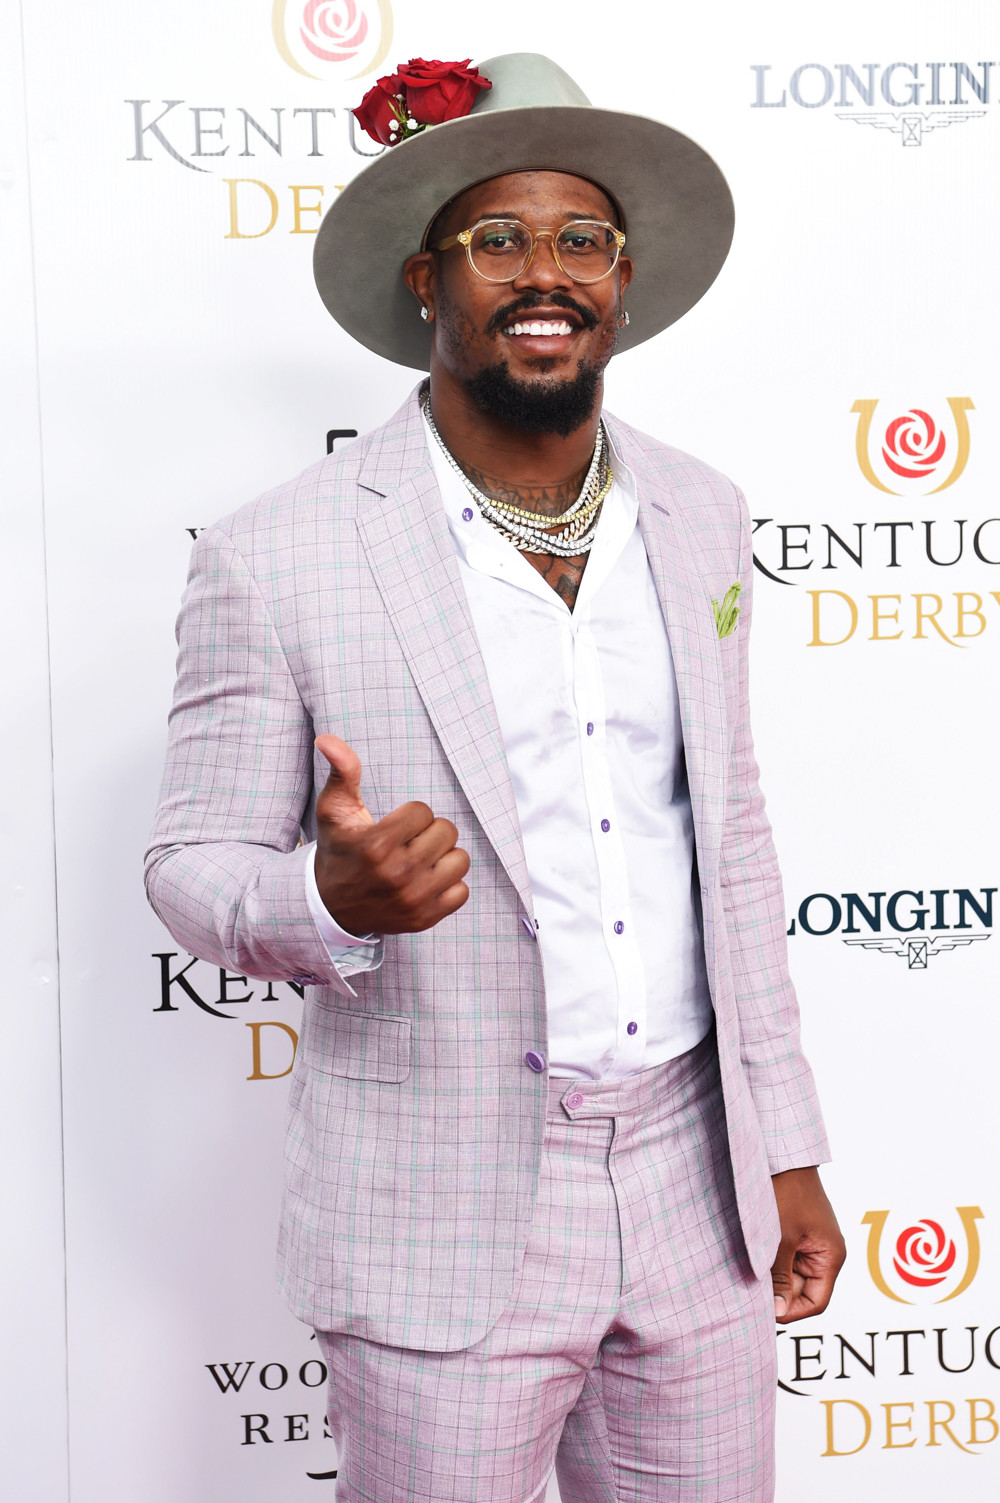 Kentucky Derby fashion 2021: Hats, men's fashion tips, dress tips